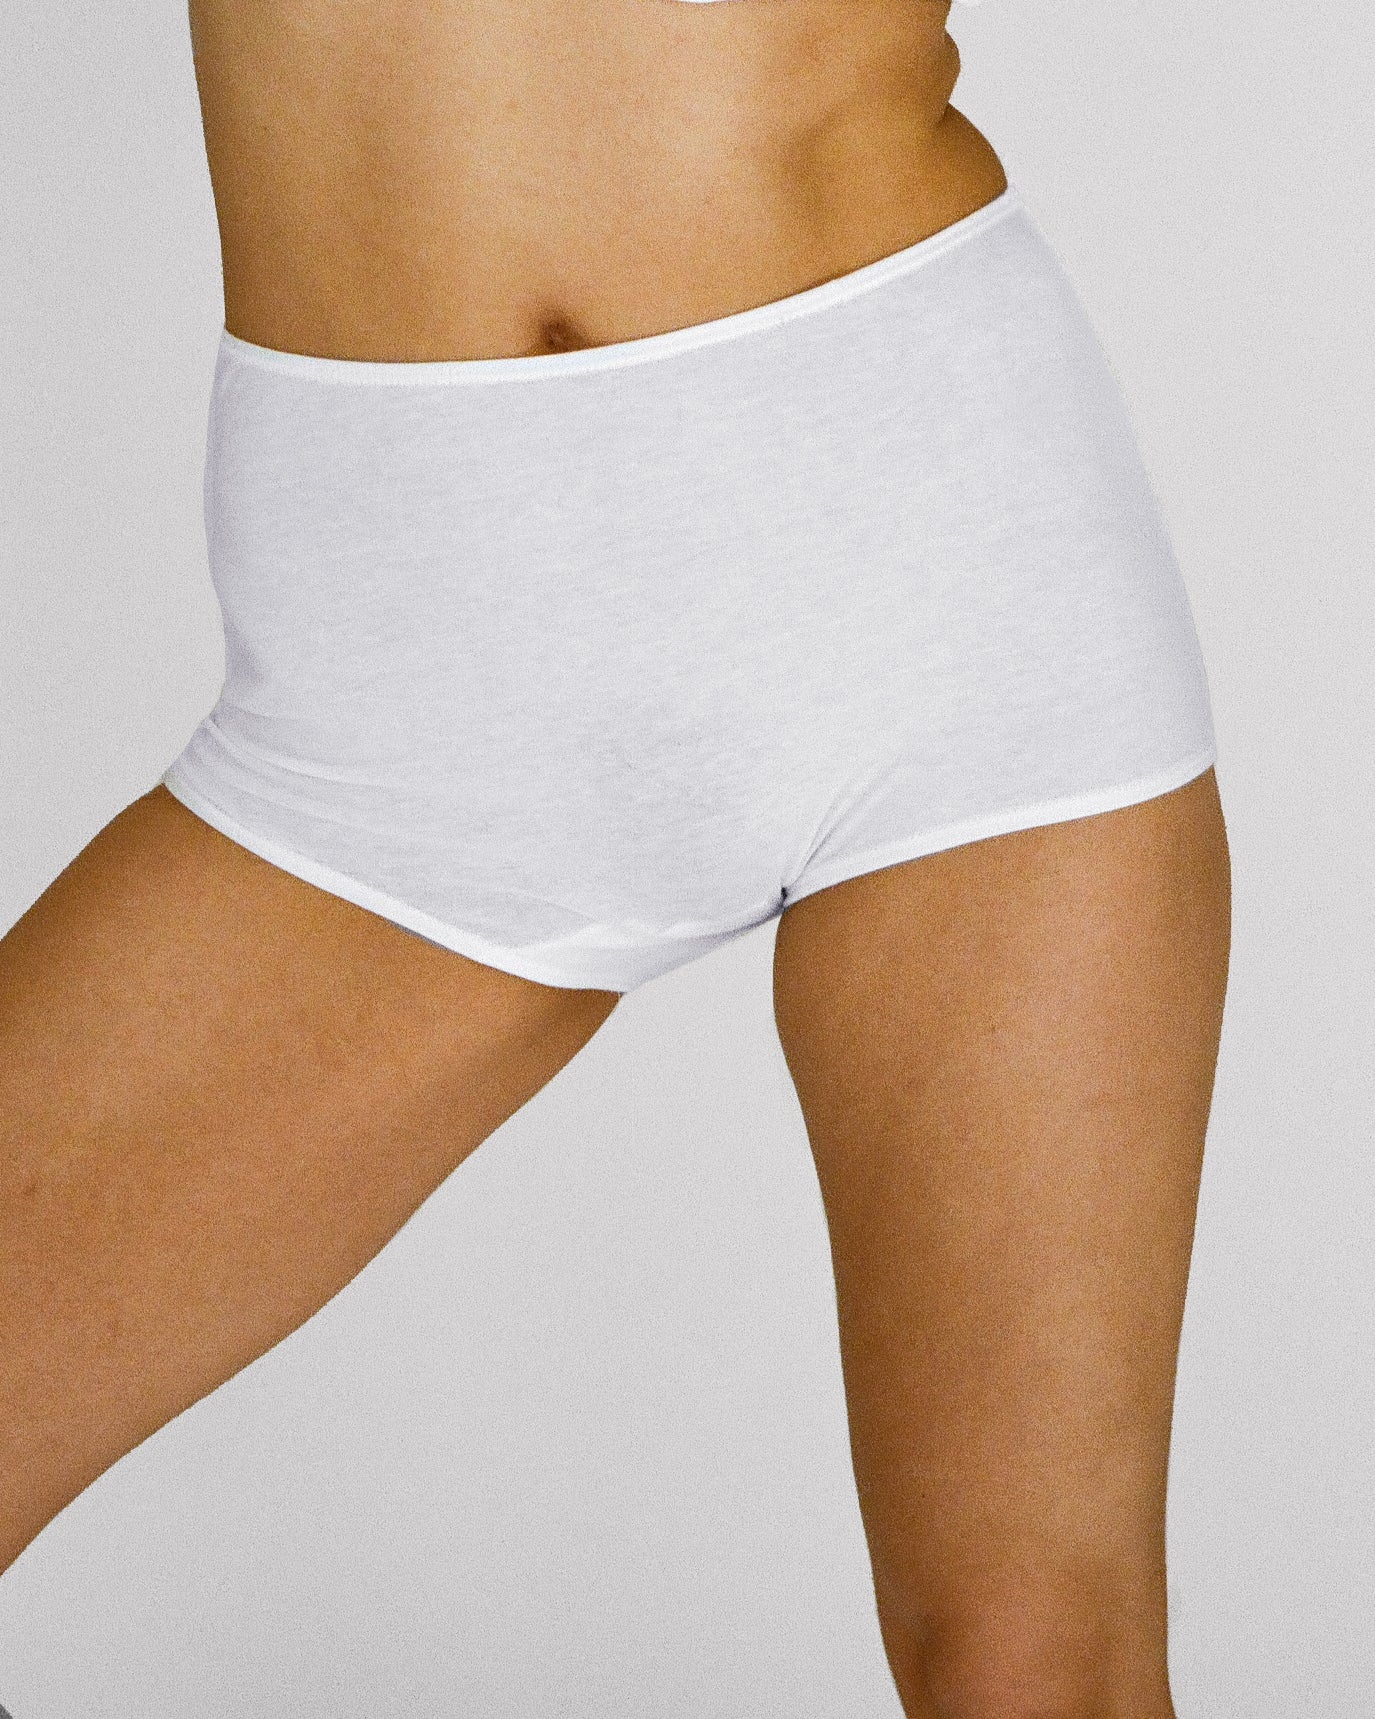 sleep short − 100% organic high waisted cotton underwear